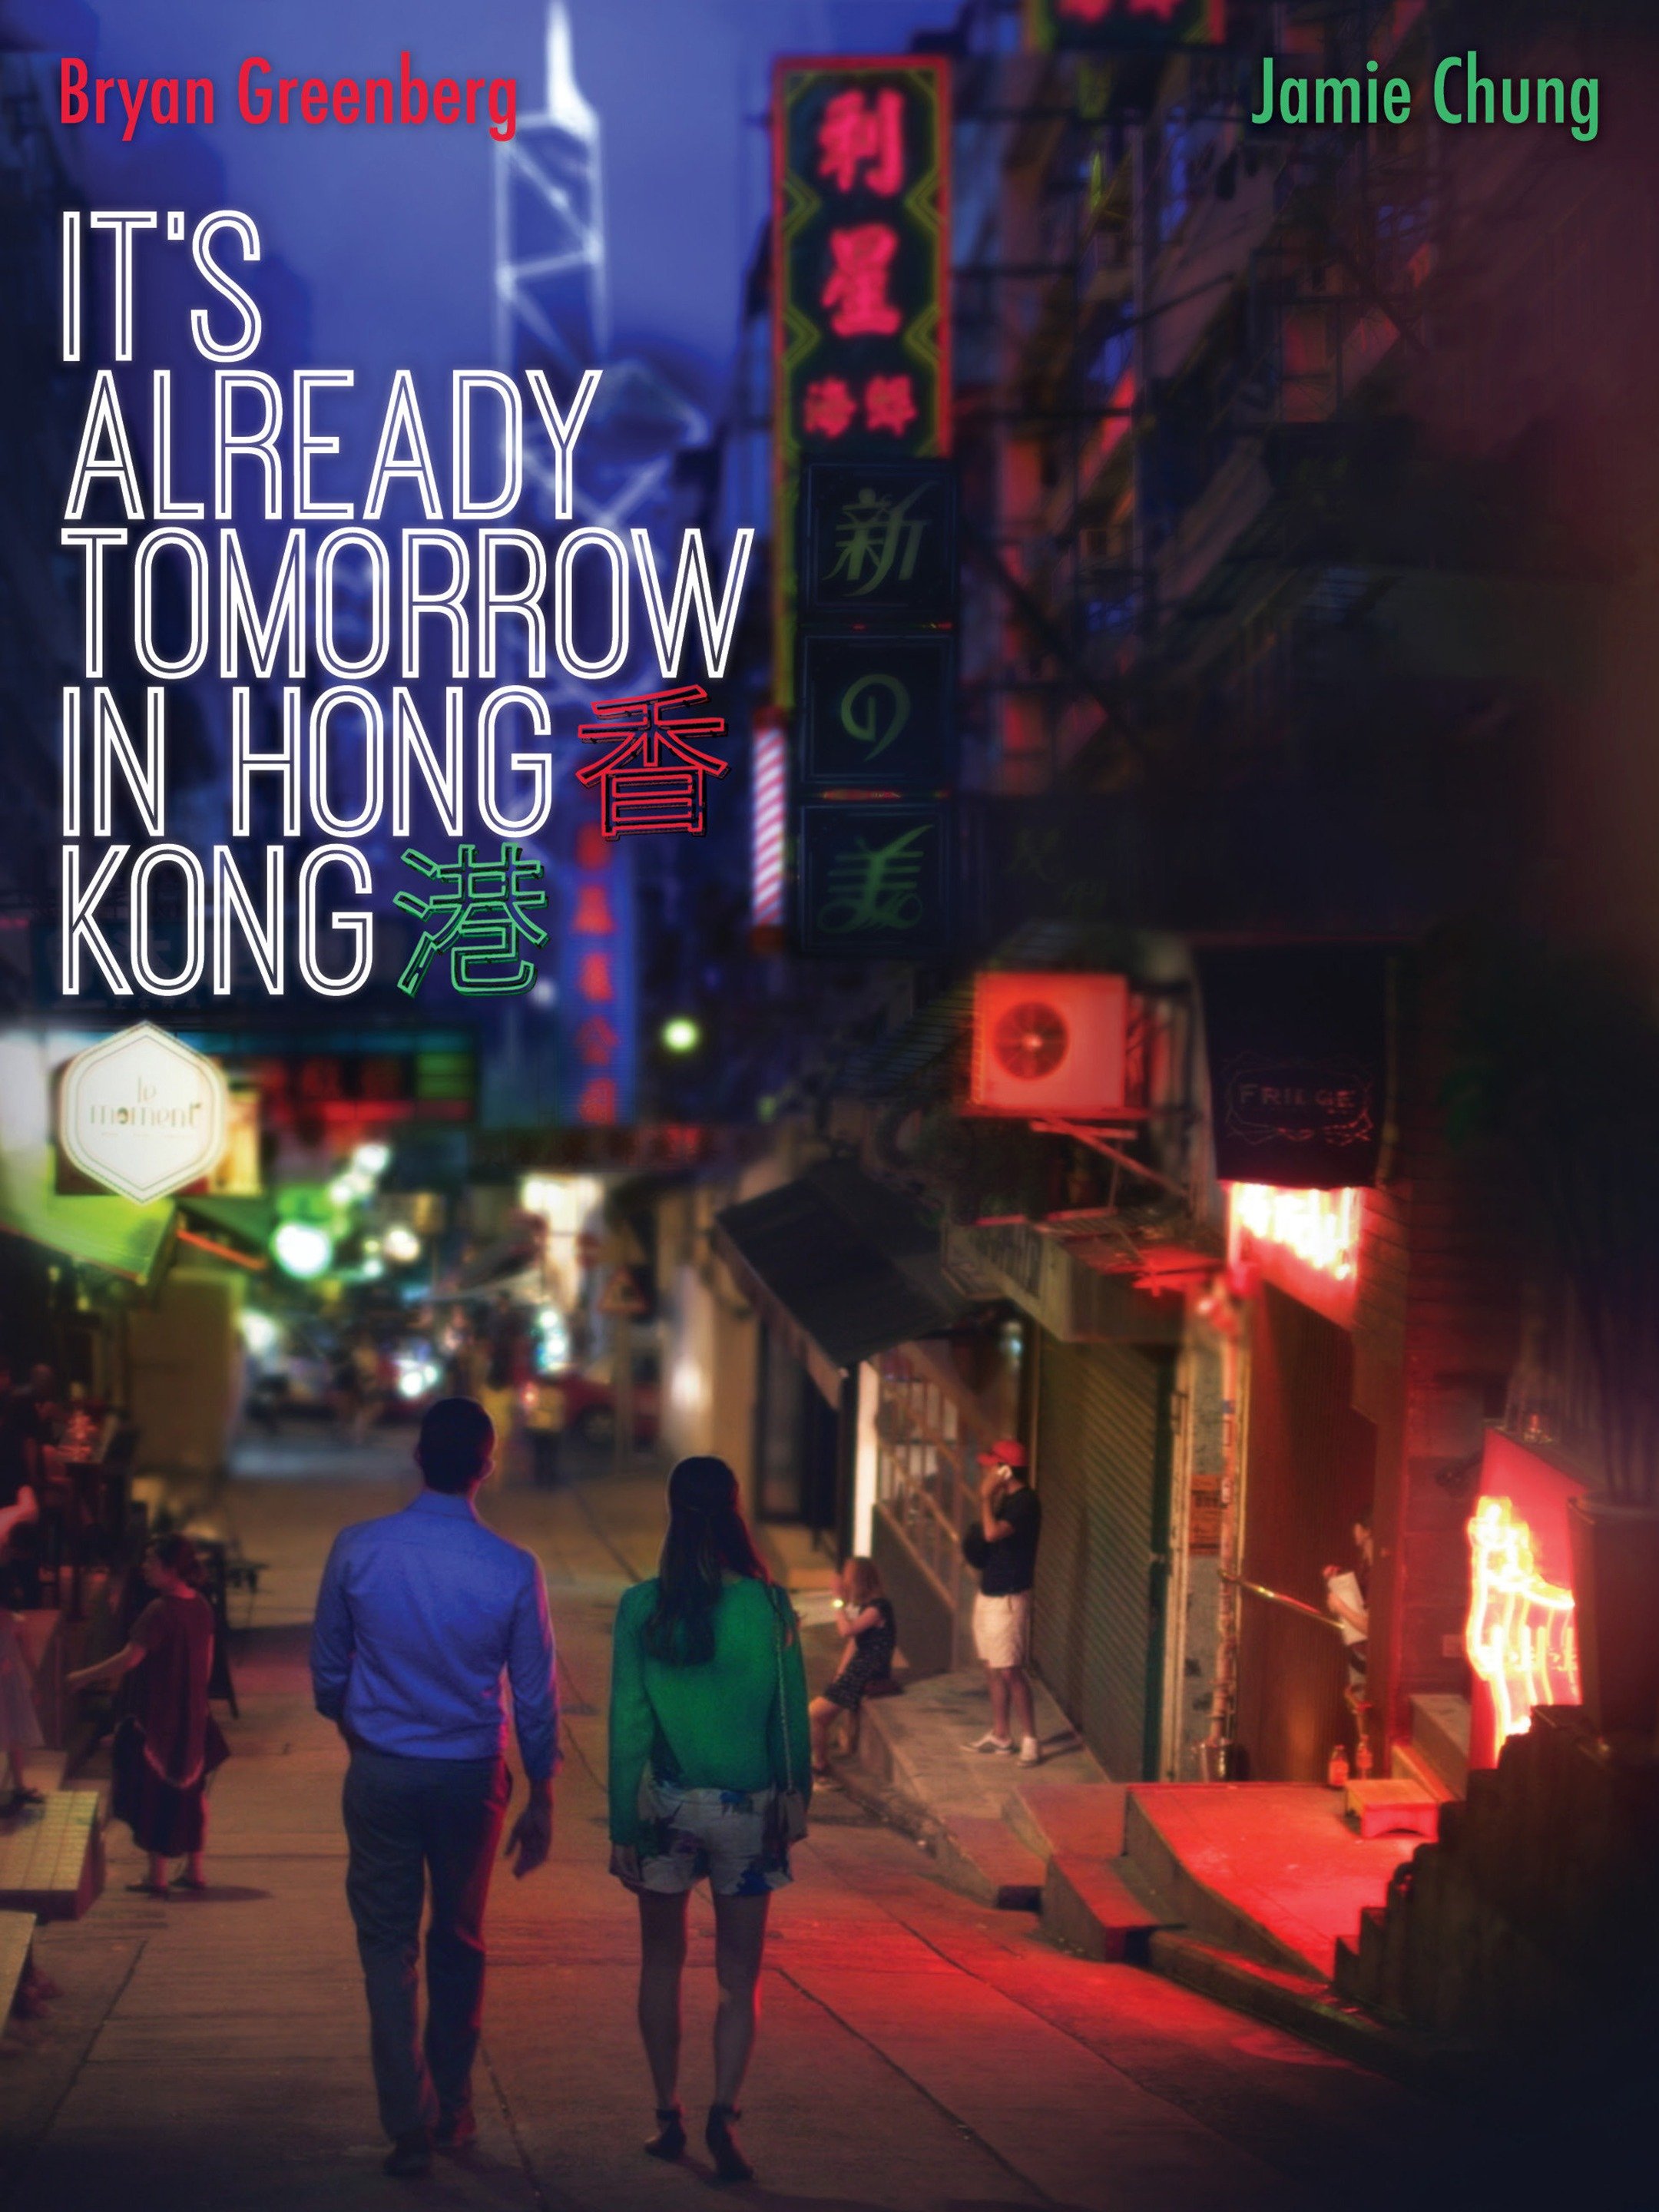 Today Hong Kong, Tomorrow the World by Mark L. Clifford